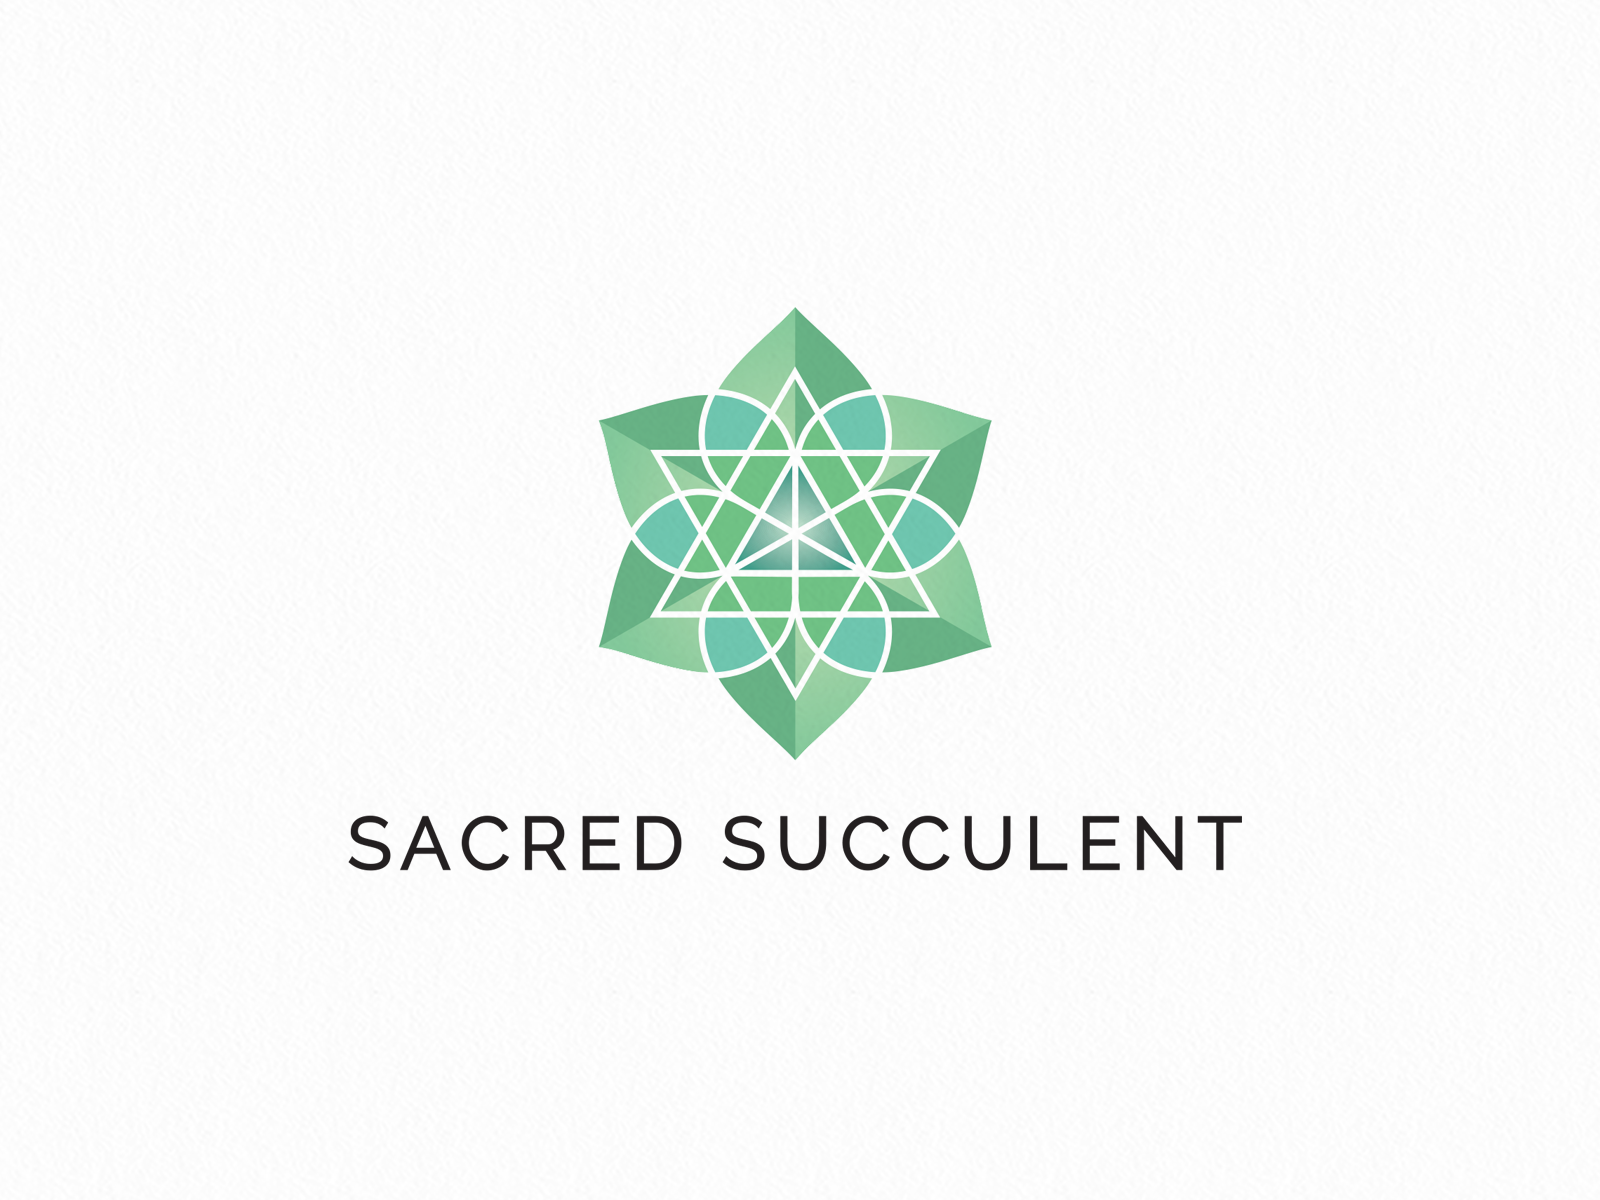 Sacred succulents